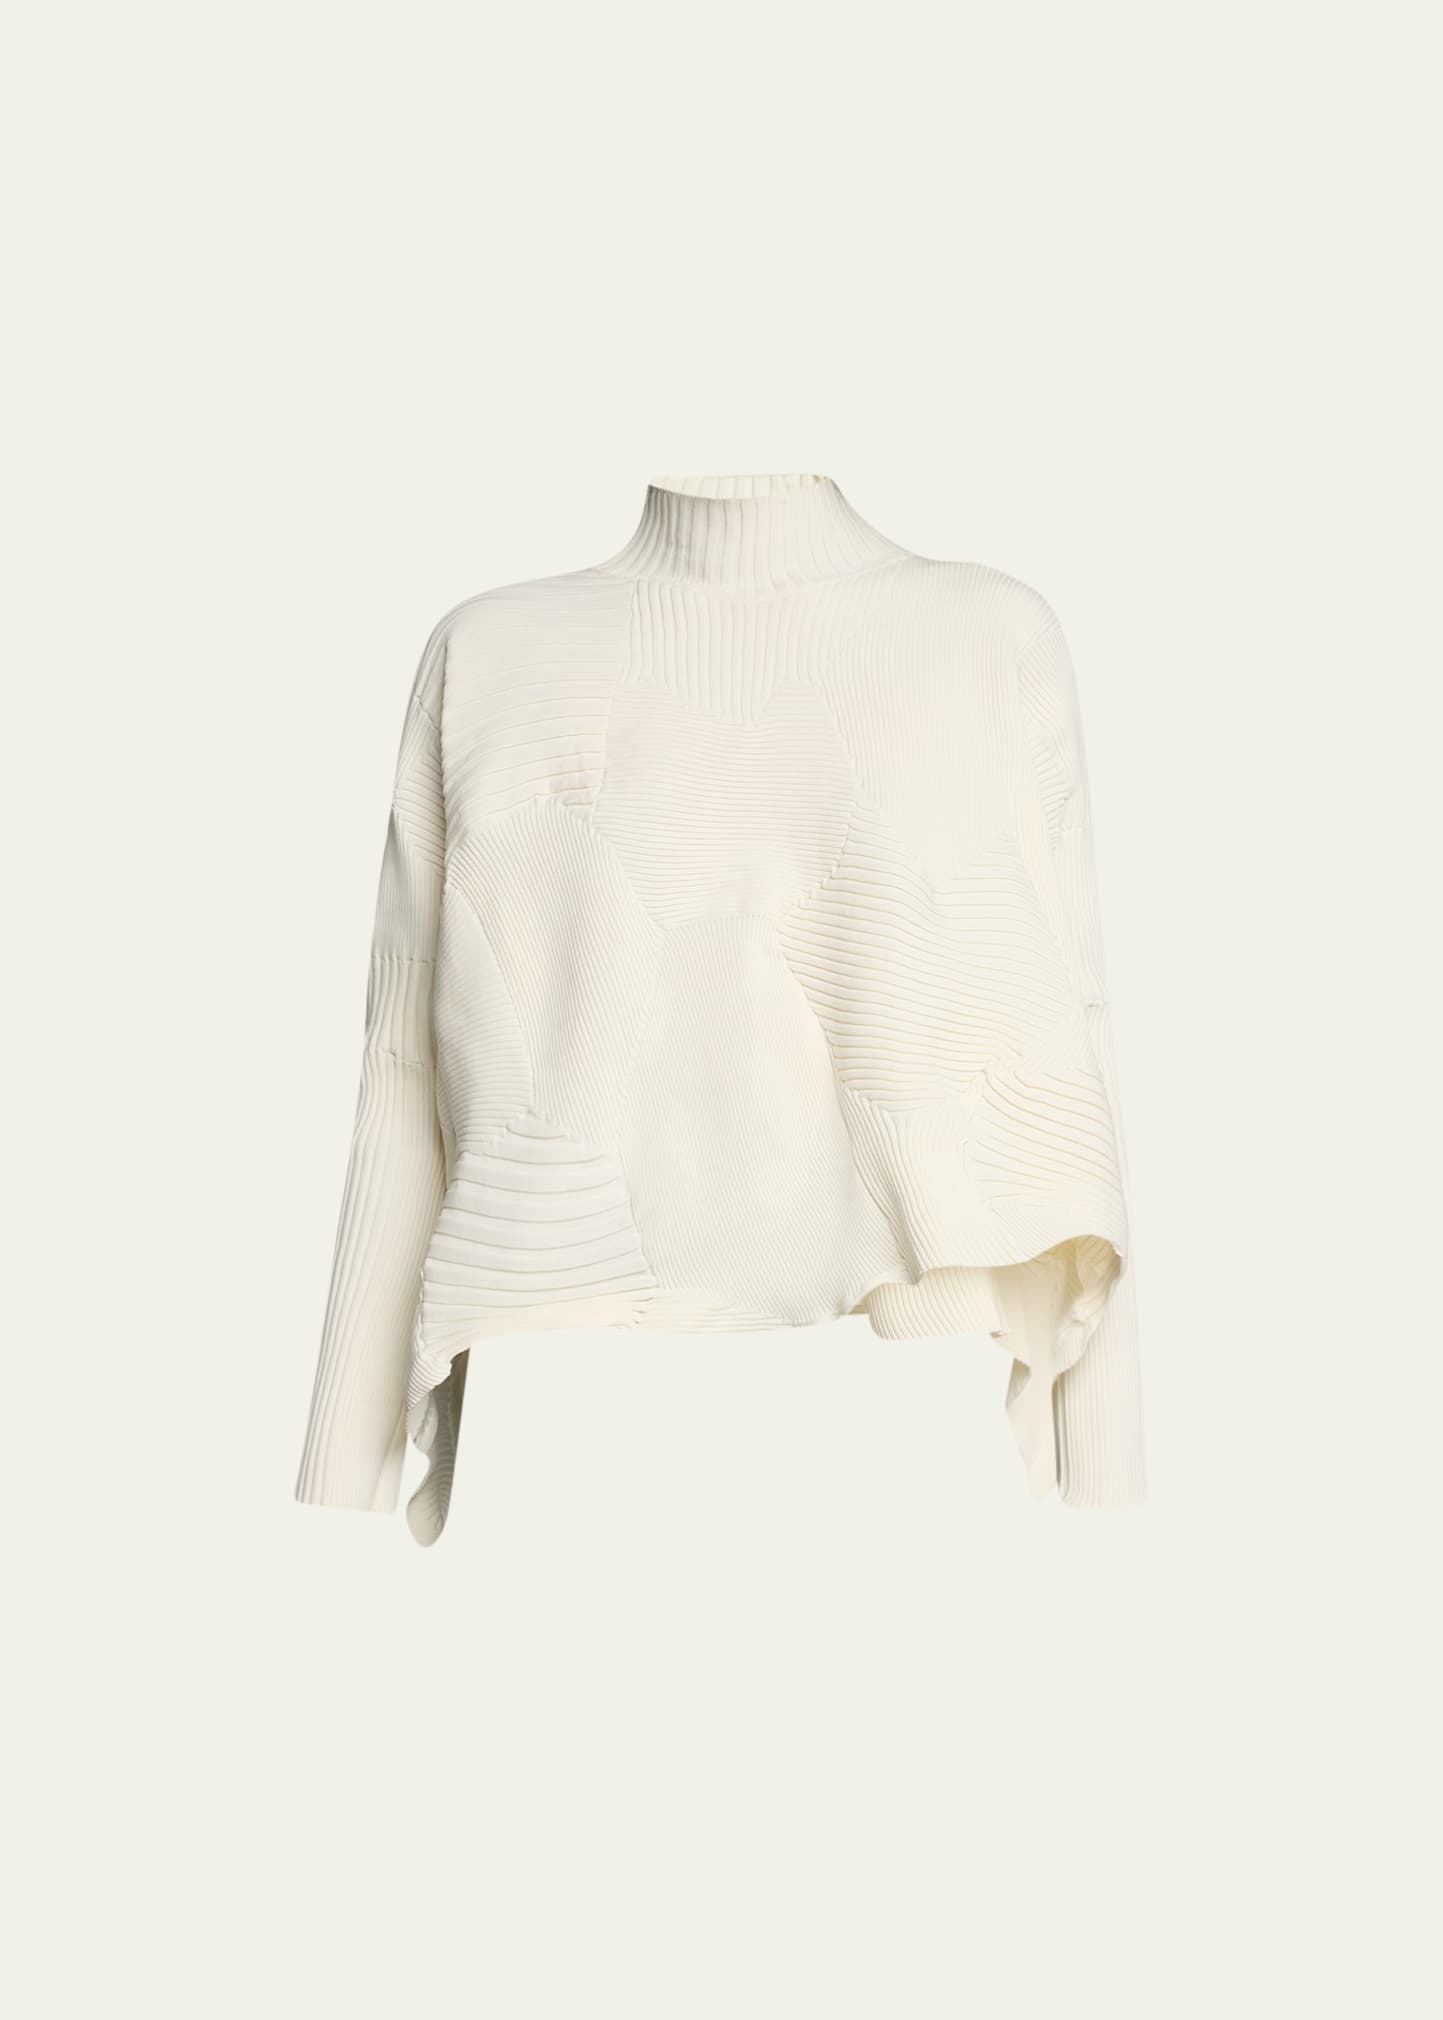 Issey Miyake Kone Kone Asymmetric Knit Sweater In White